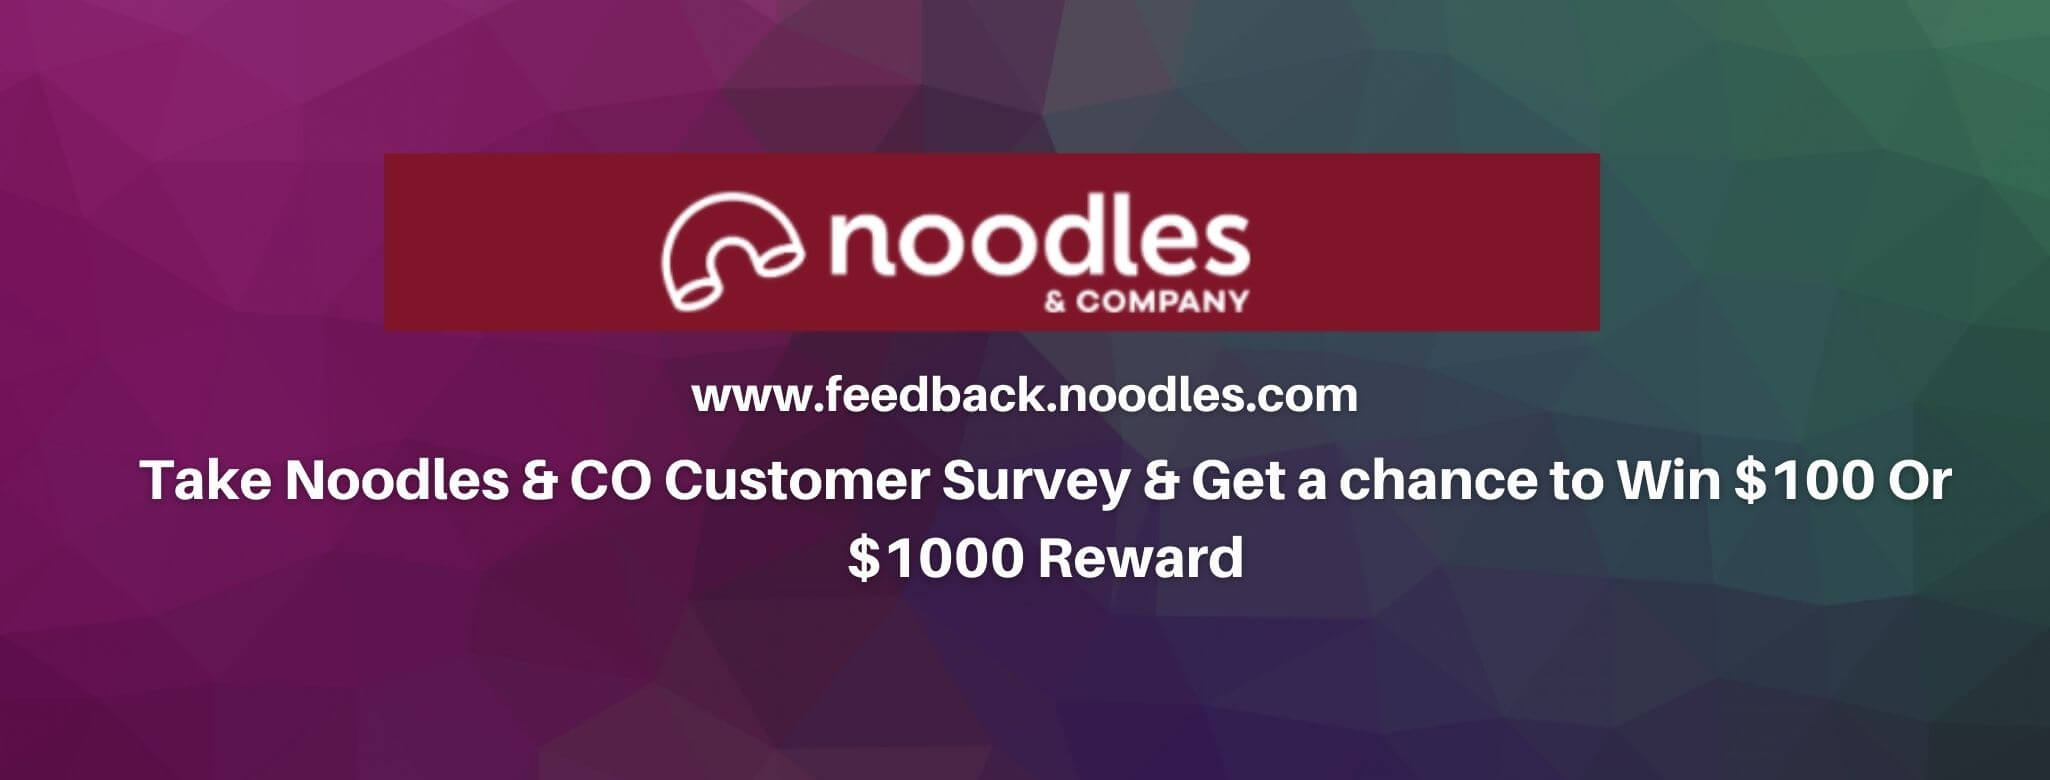 Feedback.noodles.com Survey